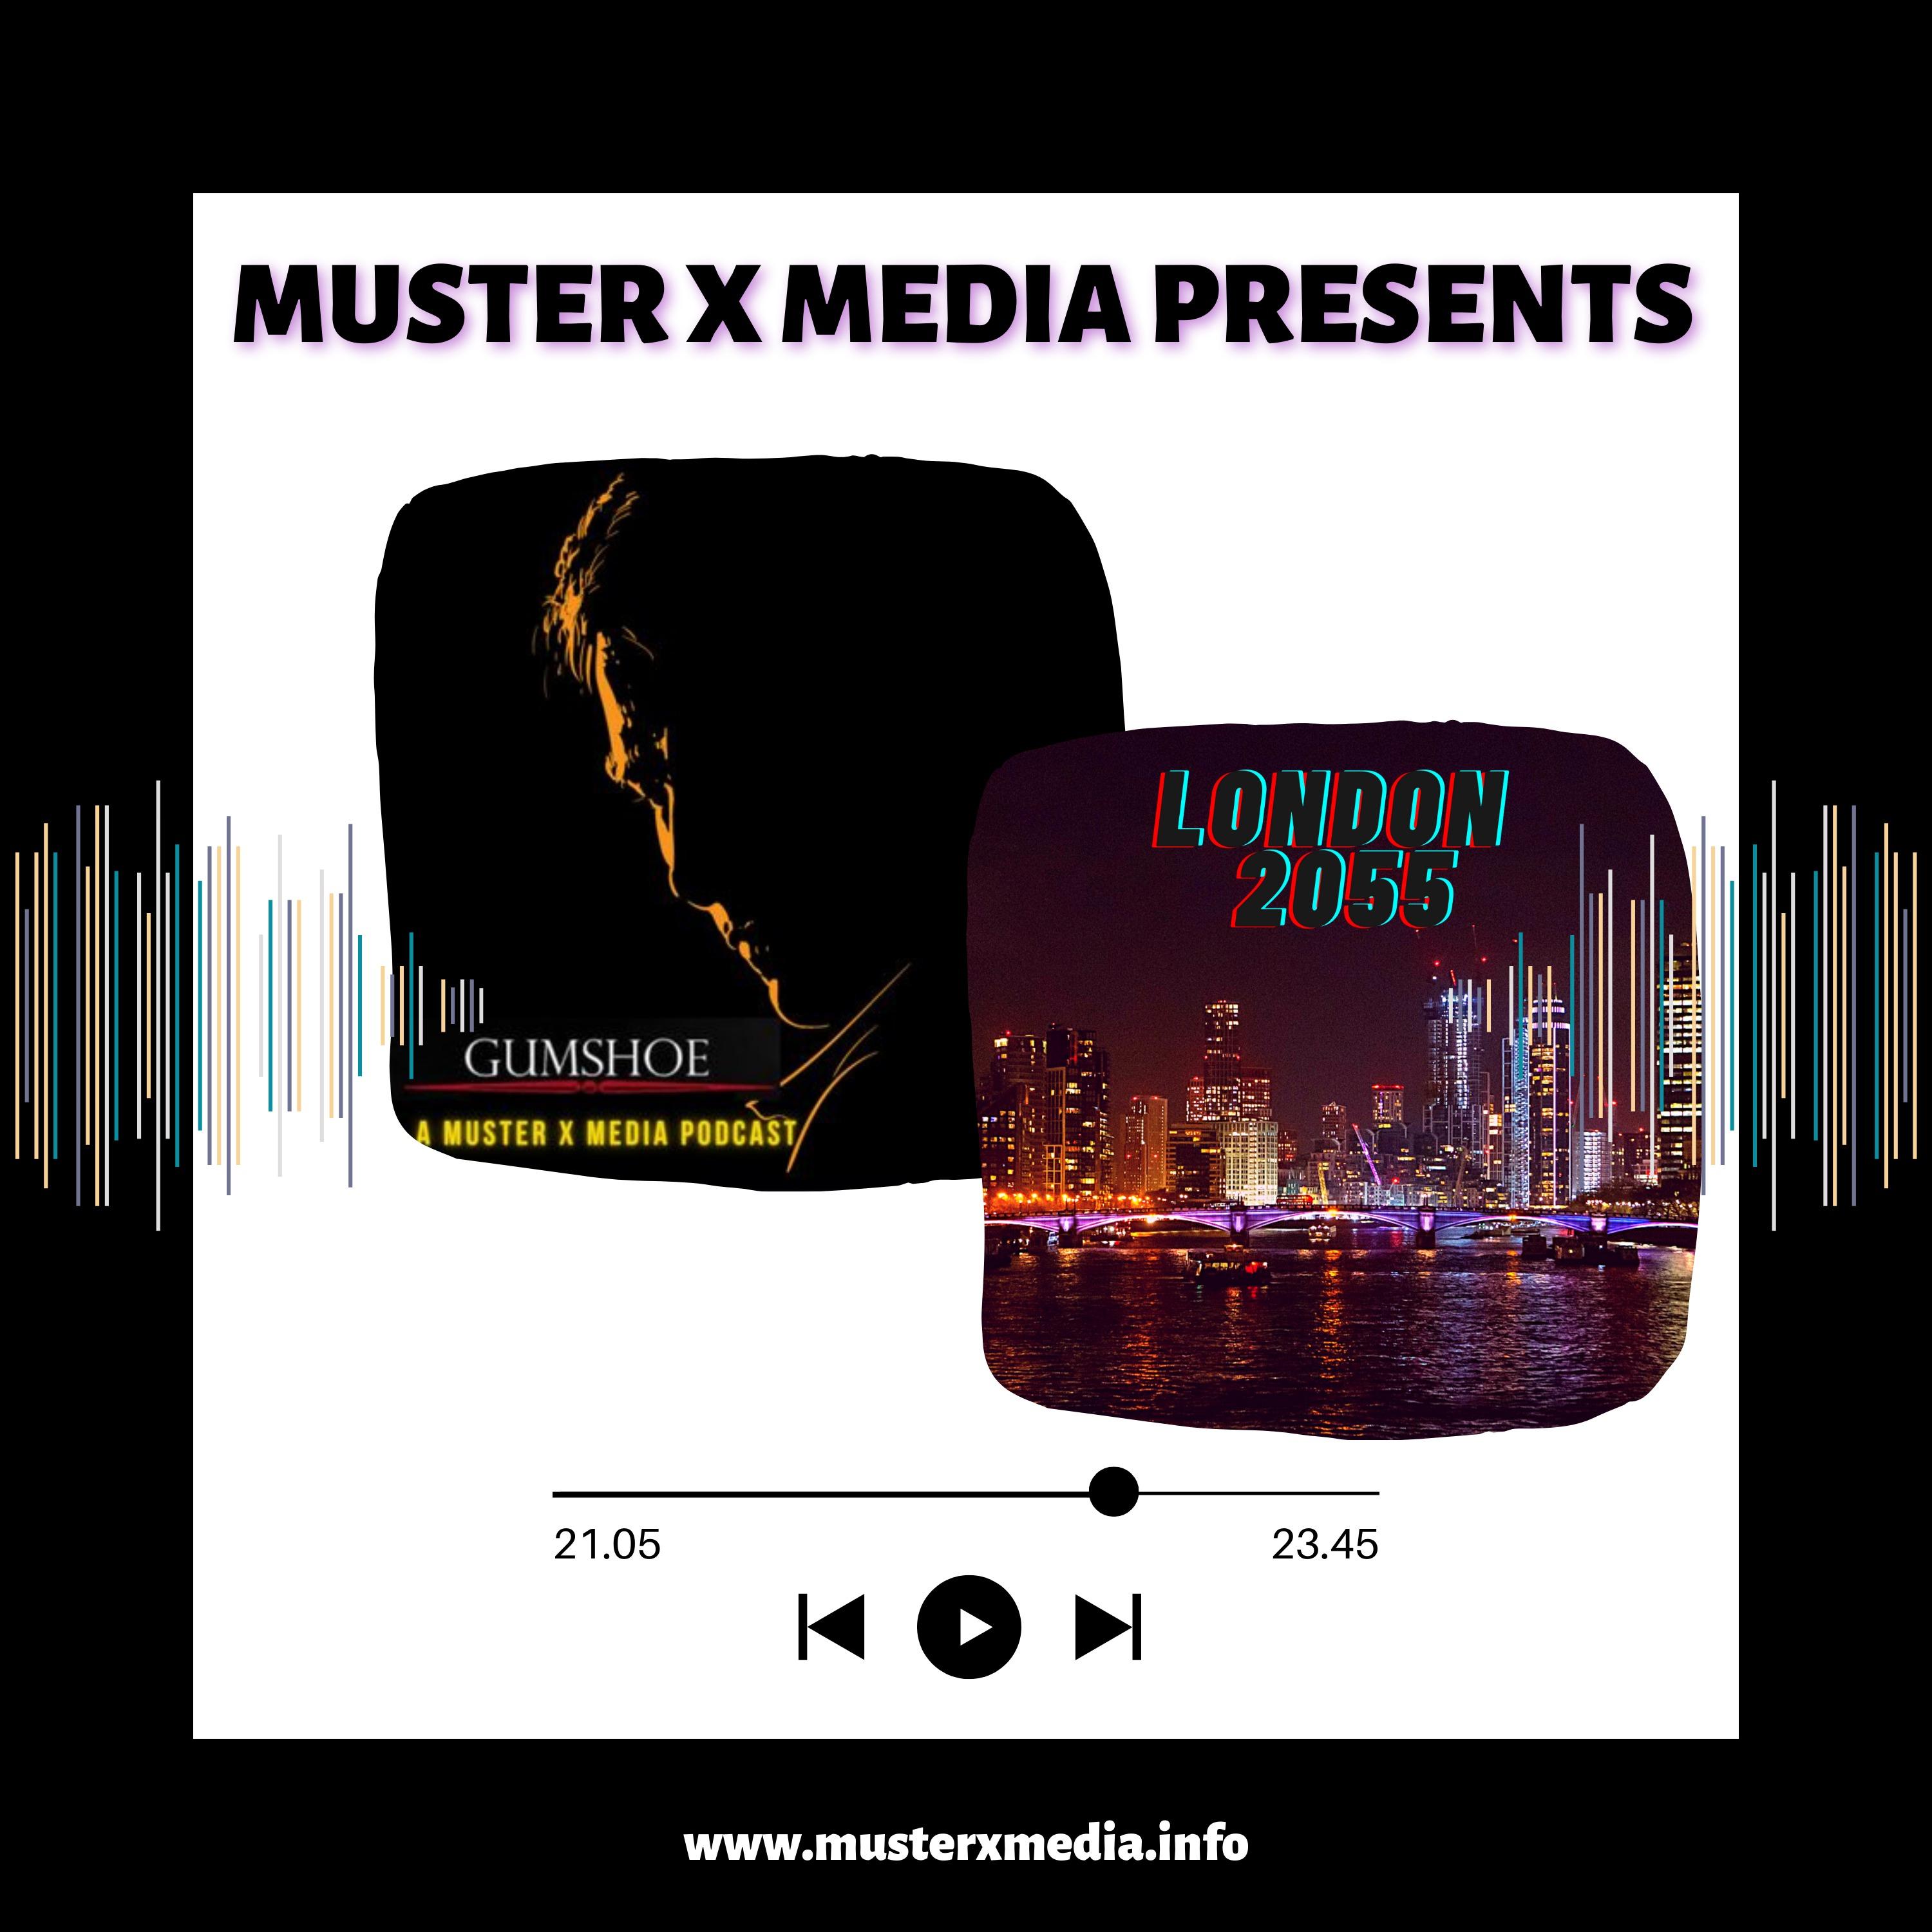 Muster X Media Presents: Gumshoe & London 2055